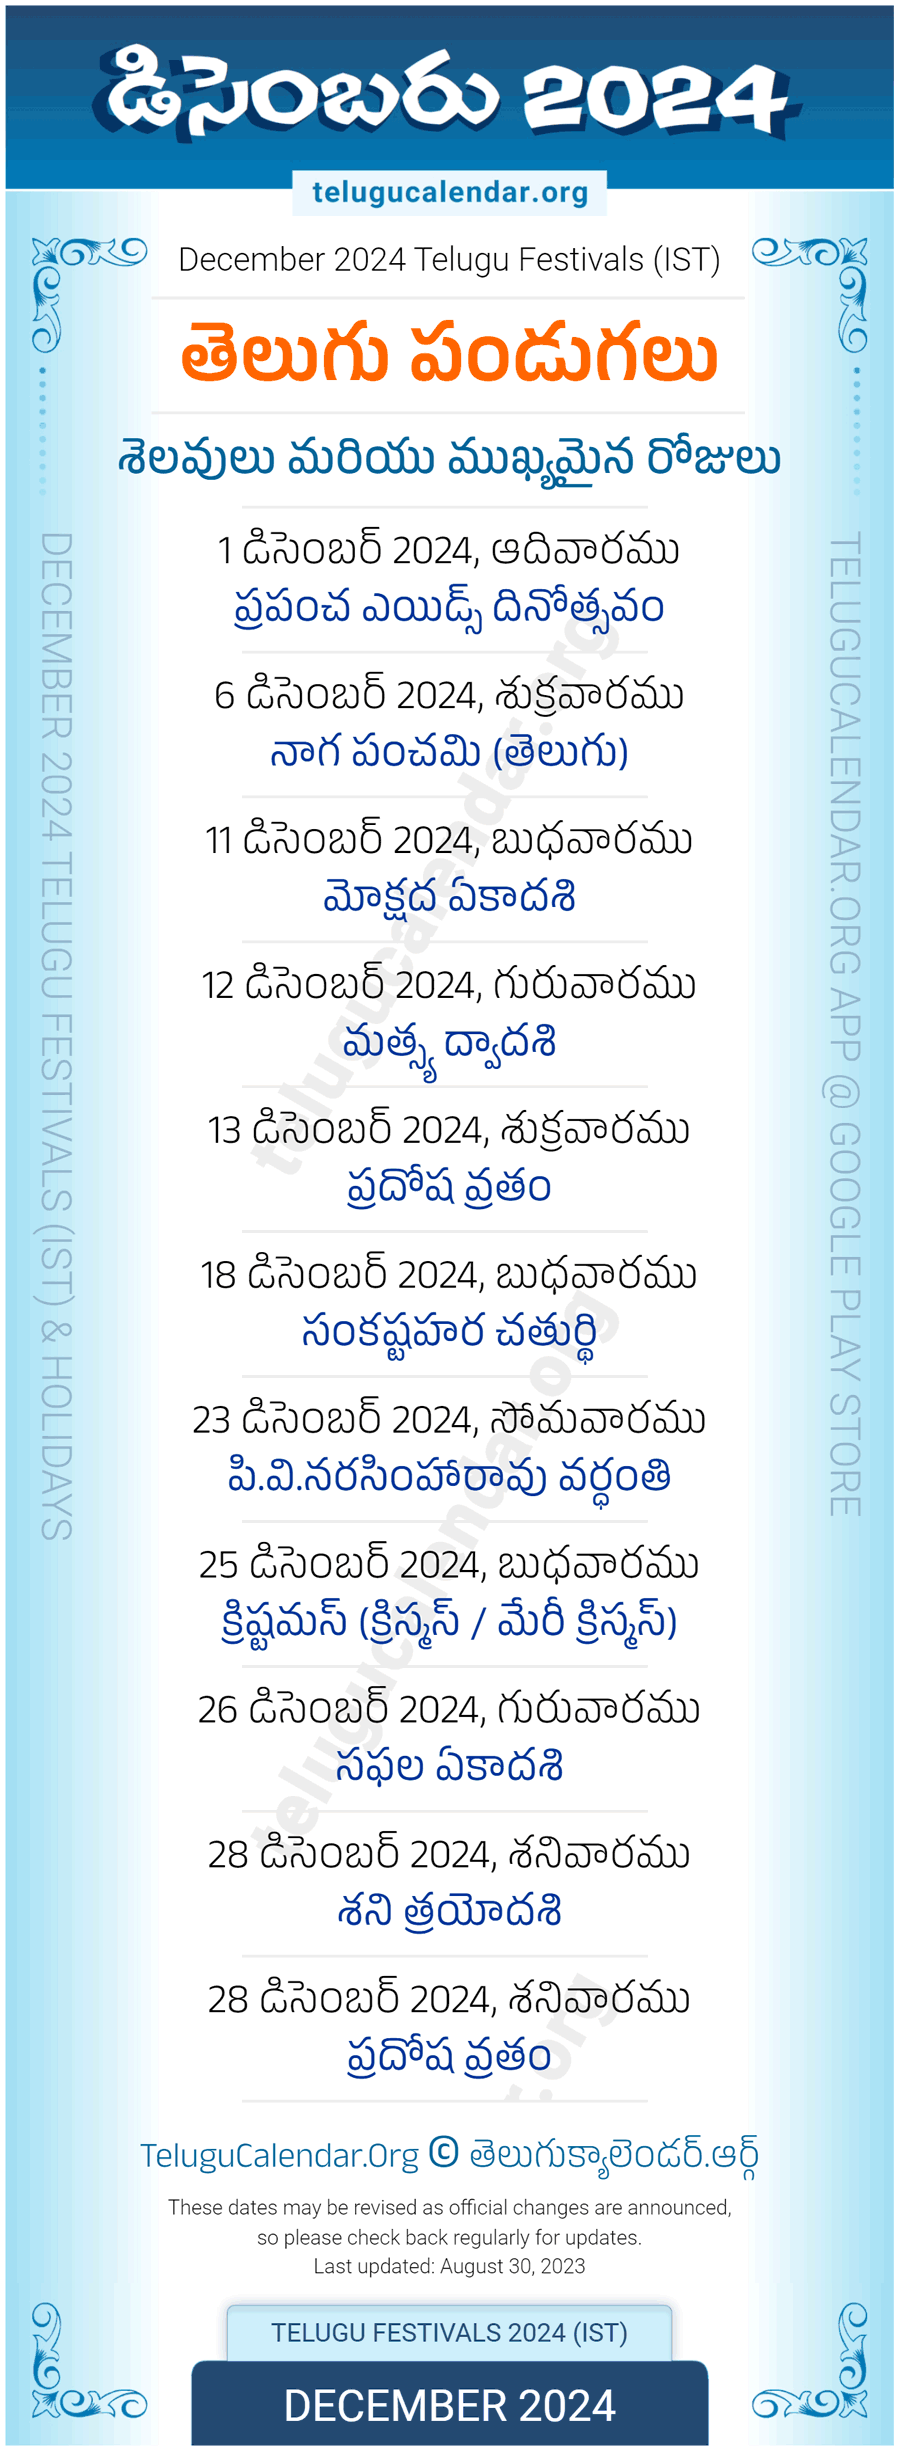 Telugu Festivals 2024 December